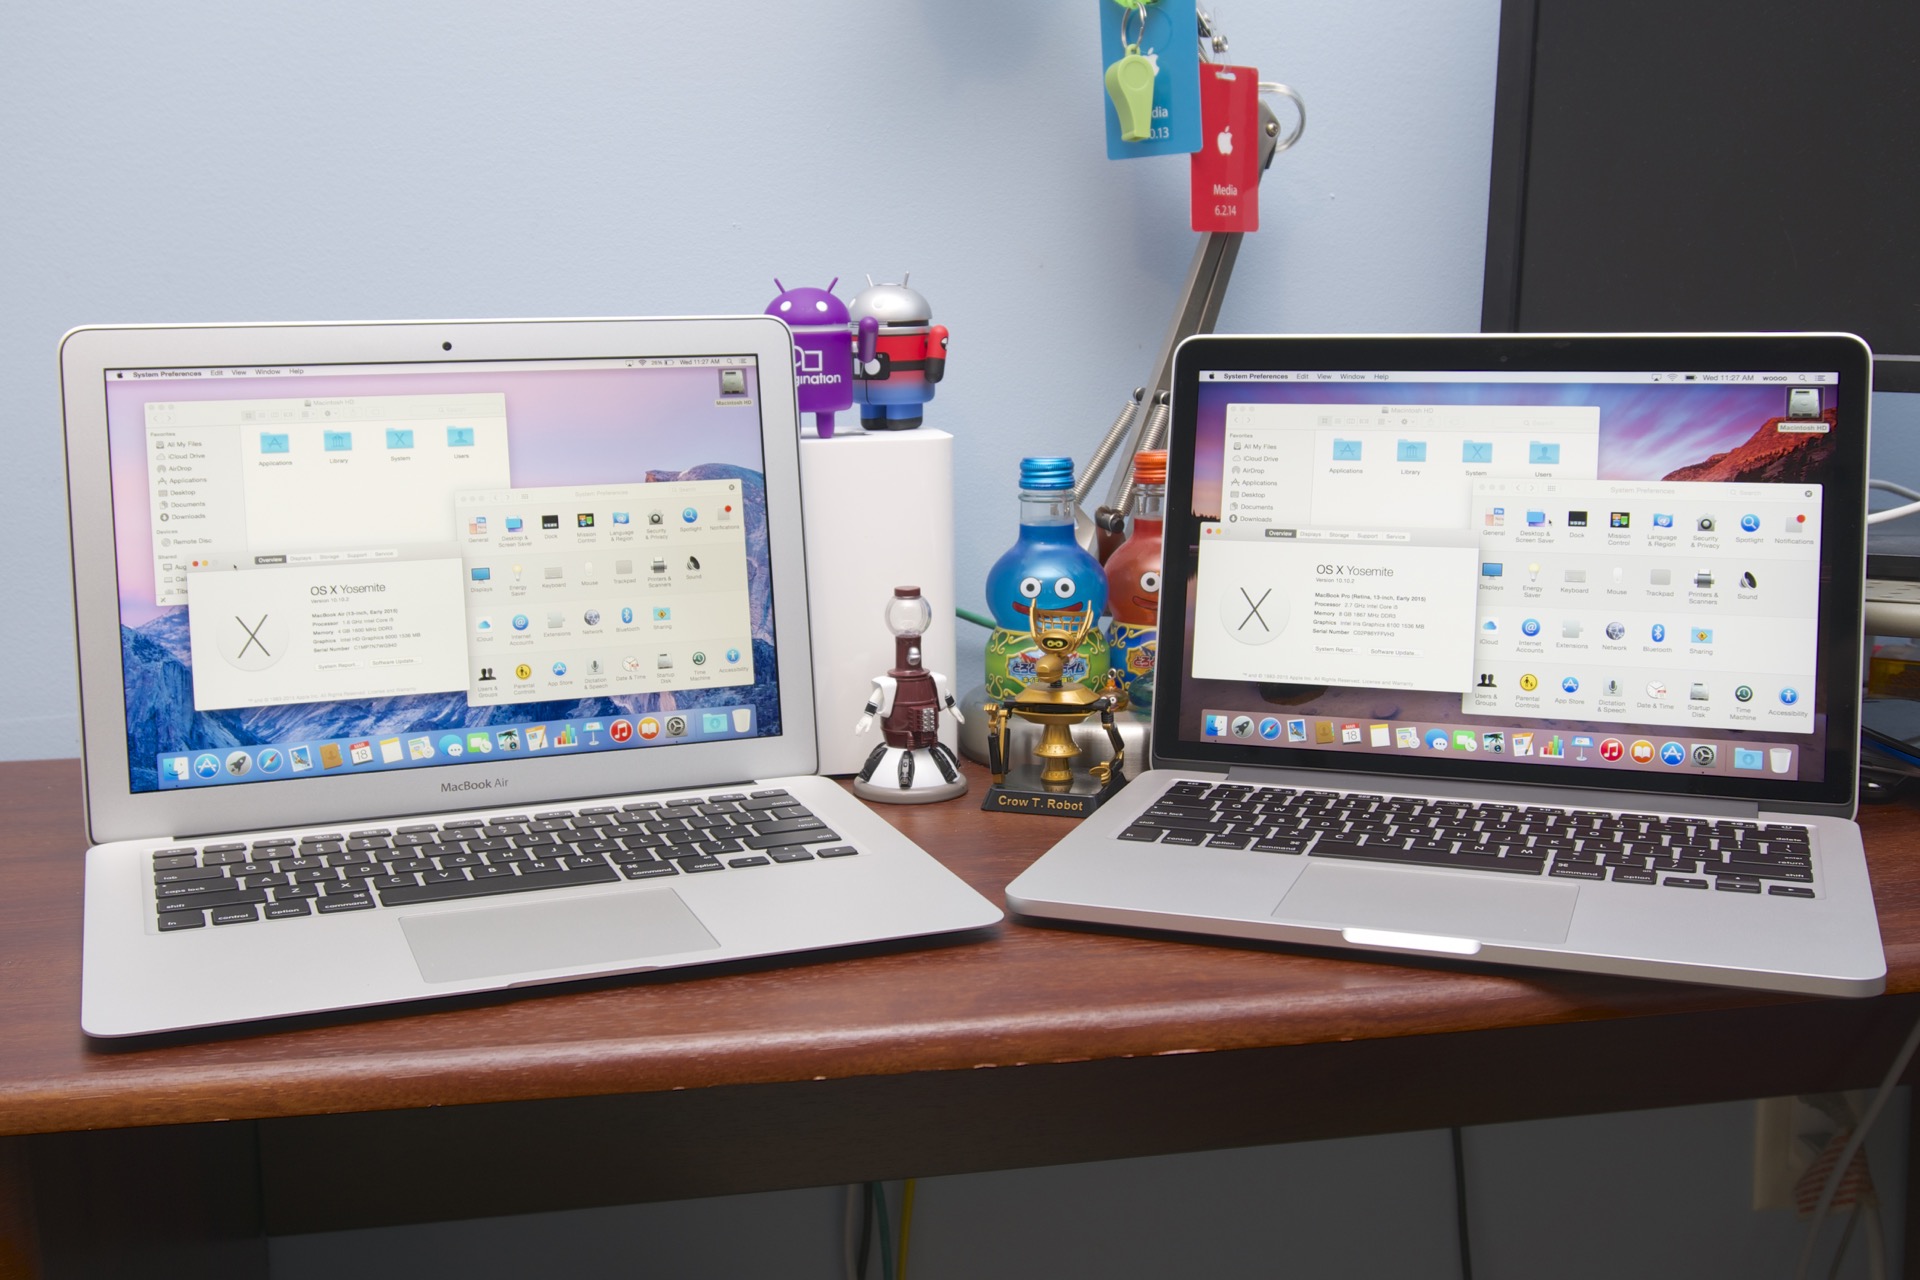 13-inch Broadwell MacBook showdown: Should you go Pro or get an